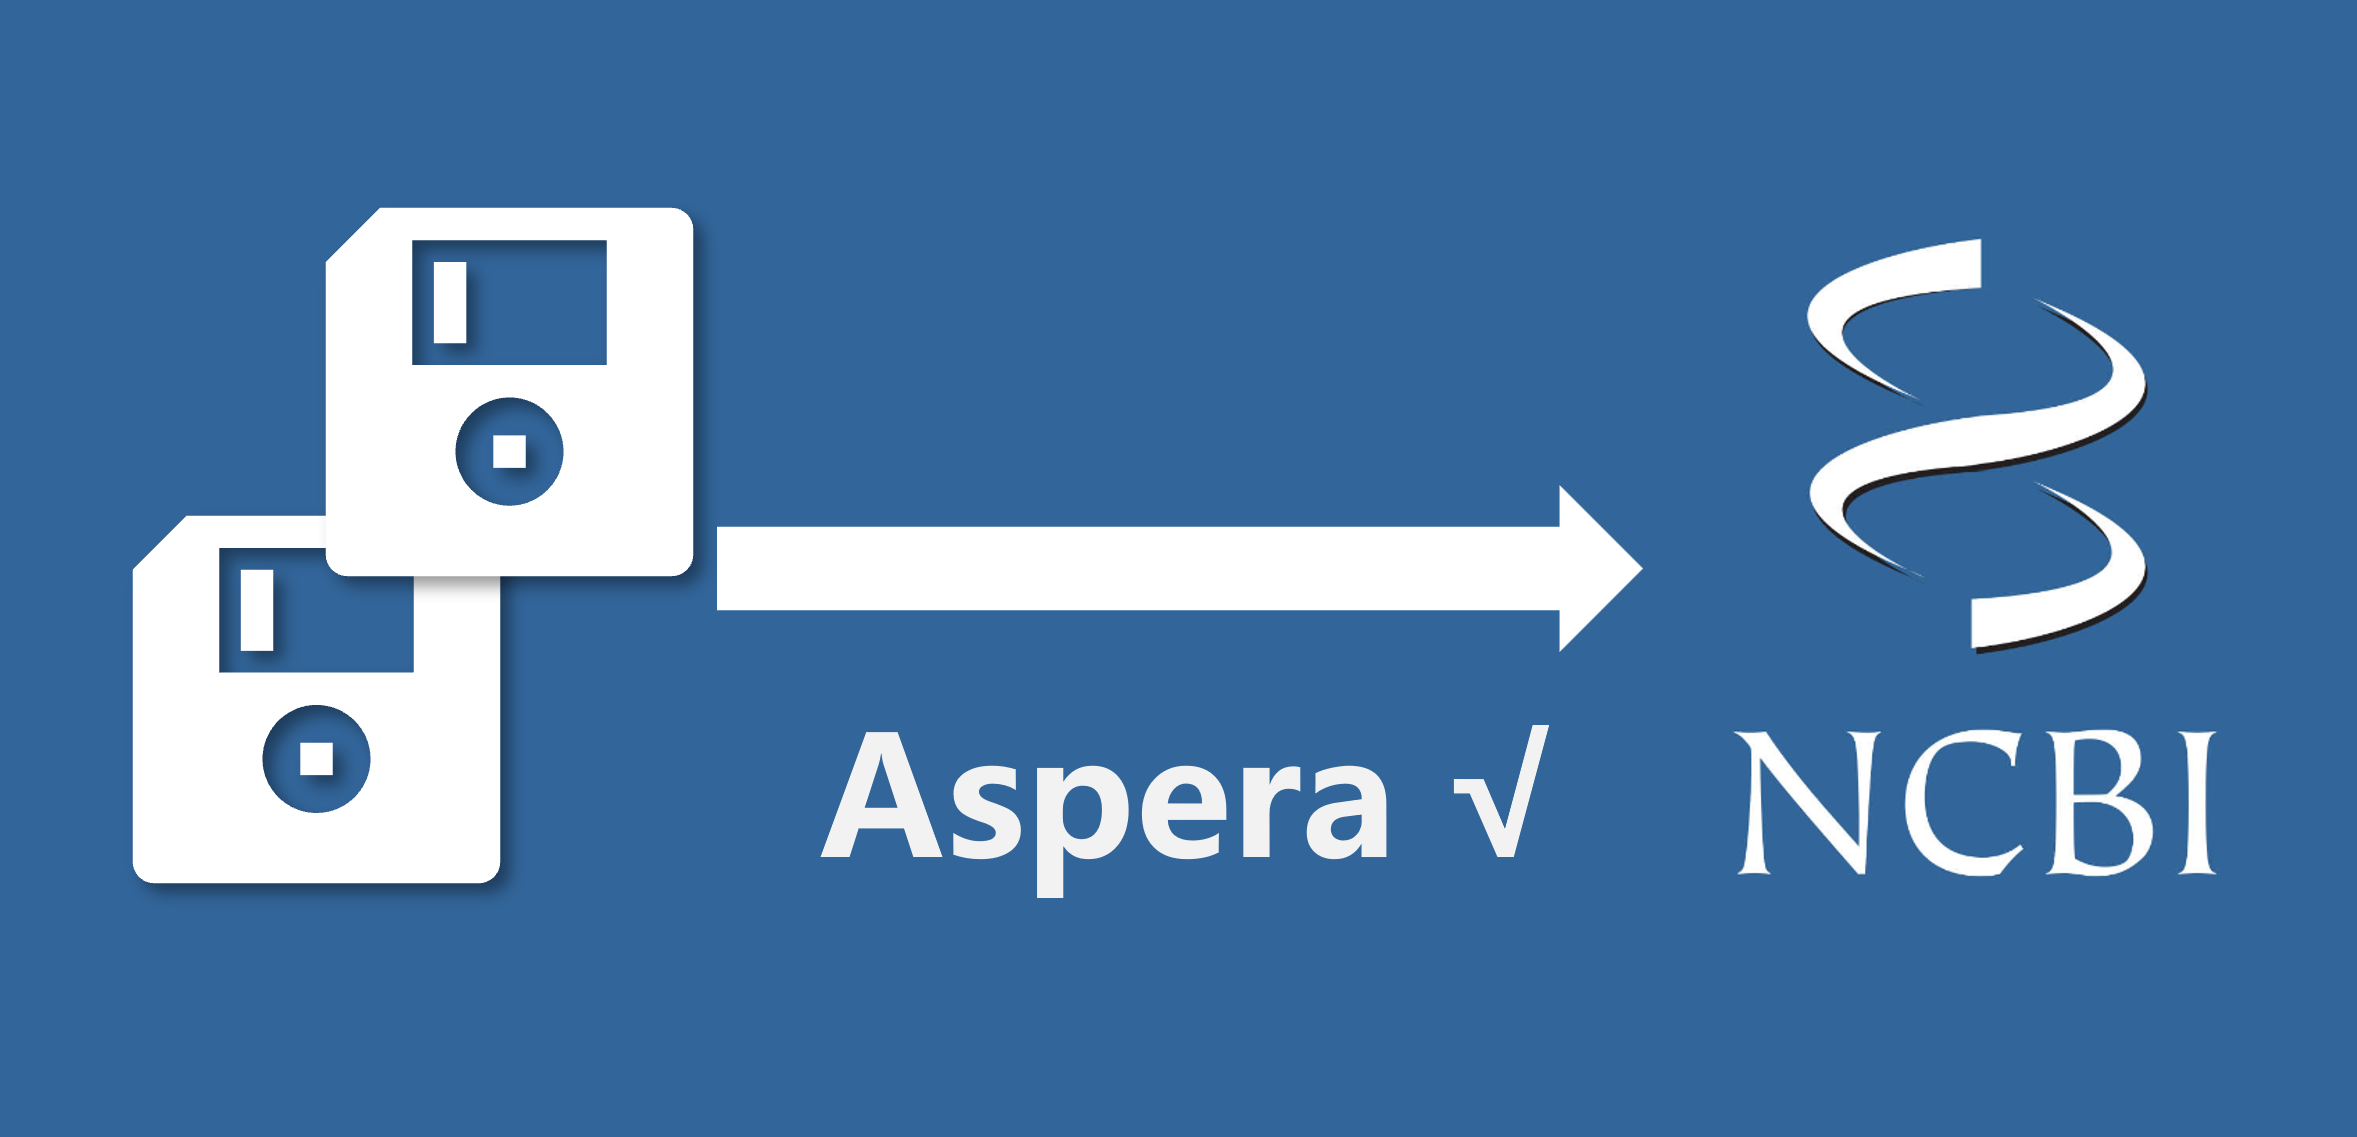 Aspera上传数据到NCBI，使用Python脚本保持传输无中断